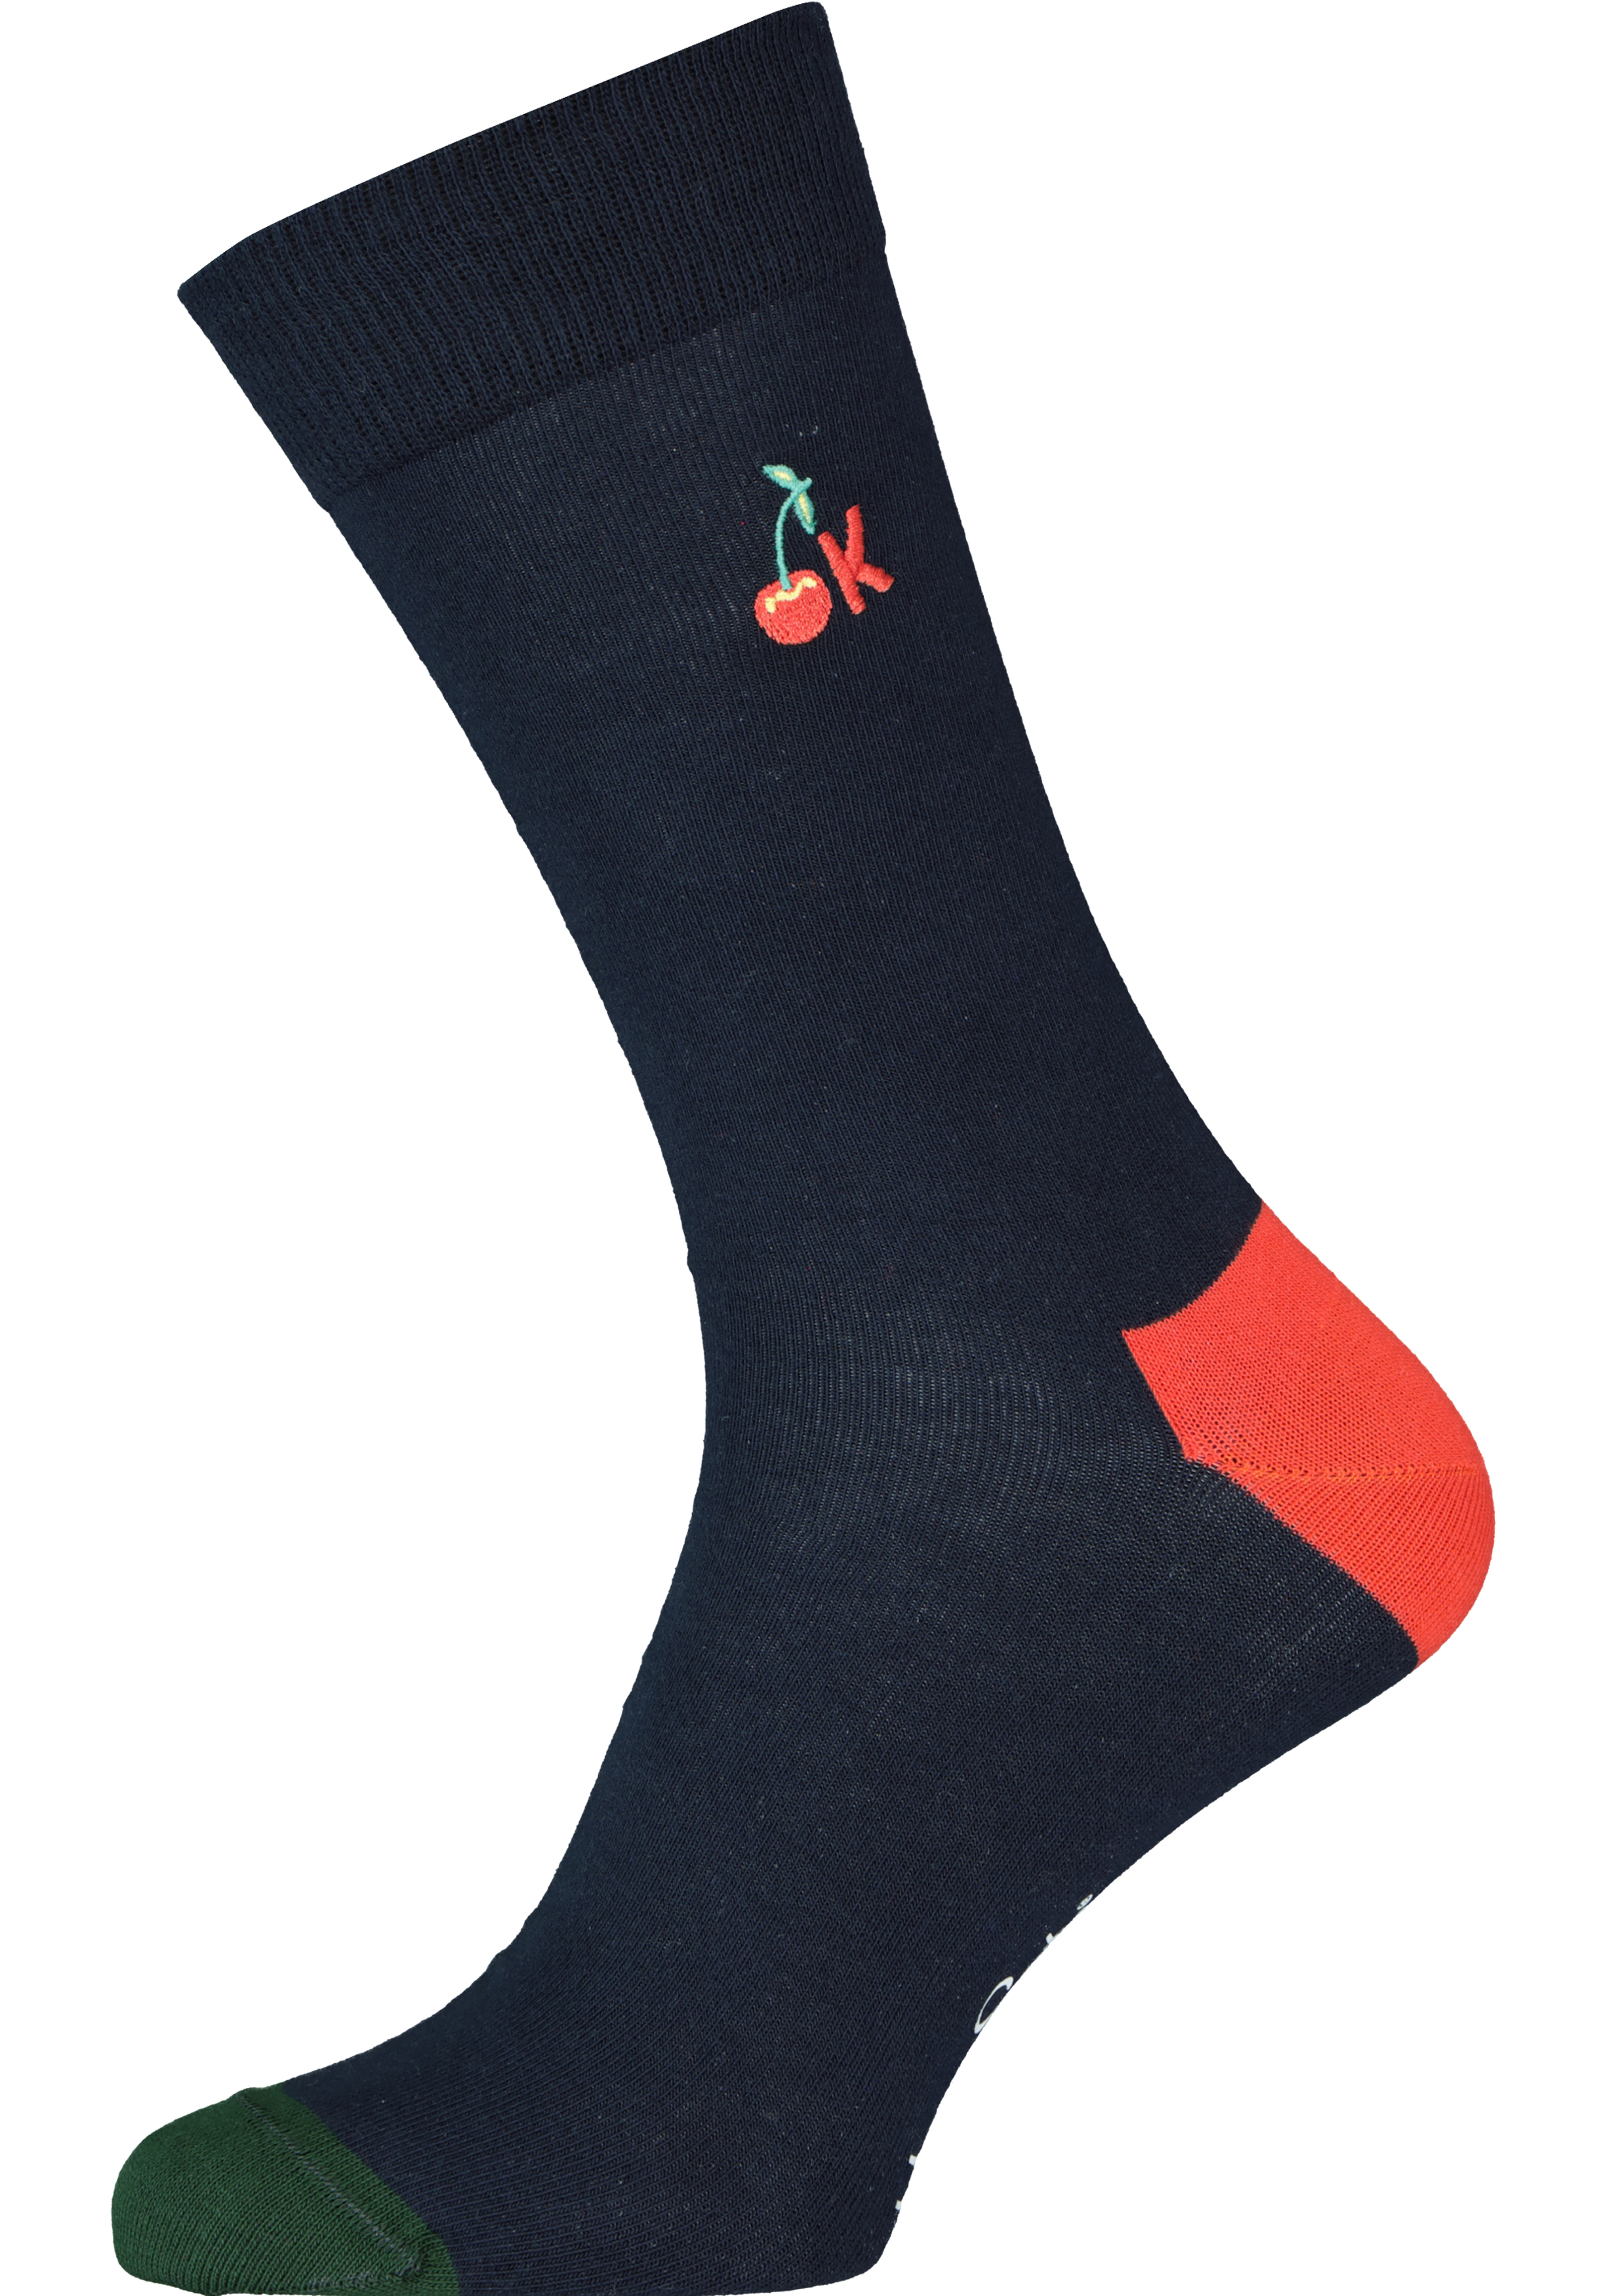 Happy Socks Embroidery Ok Sock, unisex sokken, blauw met rood is Ok